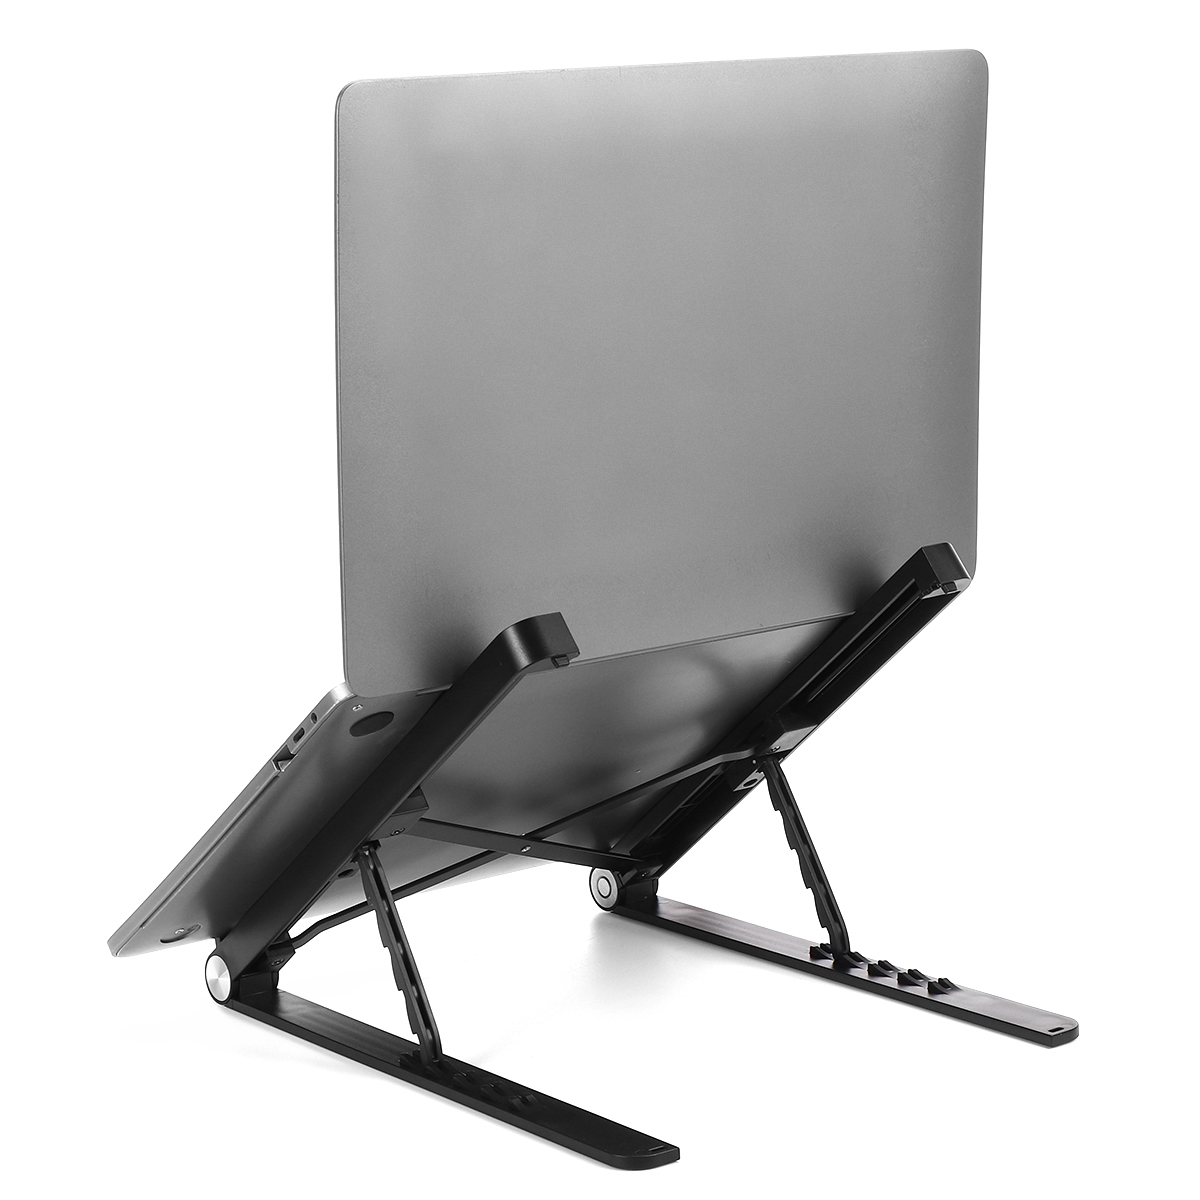 Foldable-5-Height-Adjustable-Heat-Dissipation-Telecommuting-Online-Learning-Desktop-Tablet-Laptop-St-1700967-14